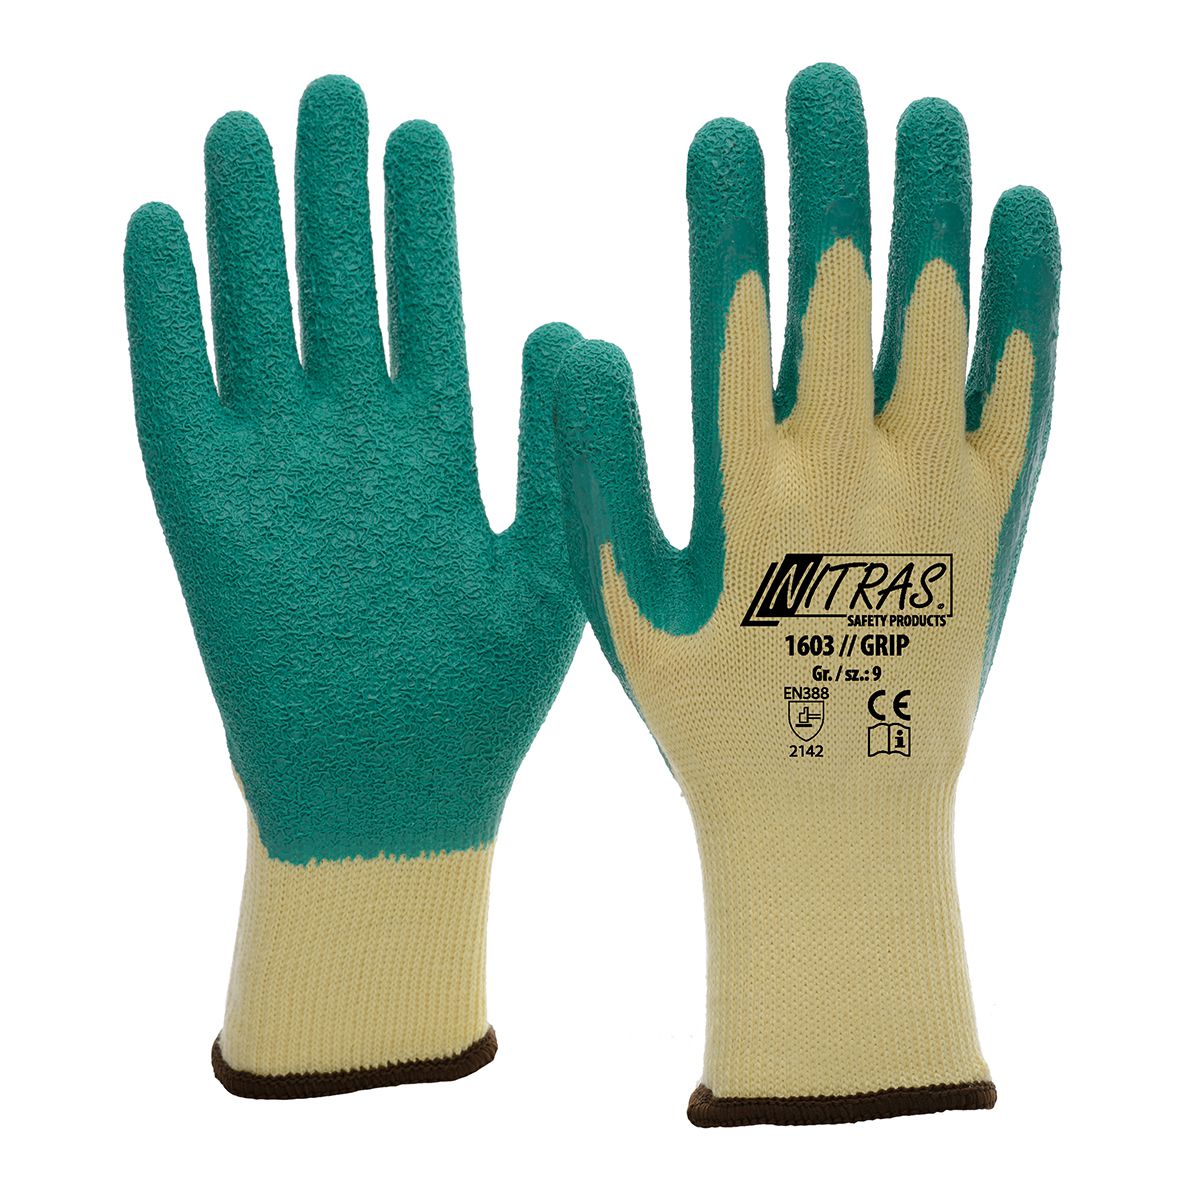 Nitras latex work glove 1603 Grip, EN 388 / EN 420, partially coated, 12 pieces, size 10/XL